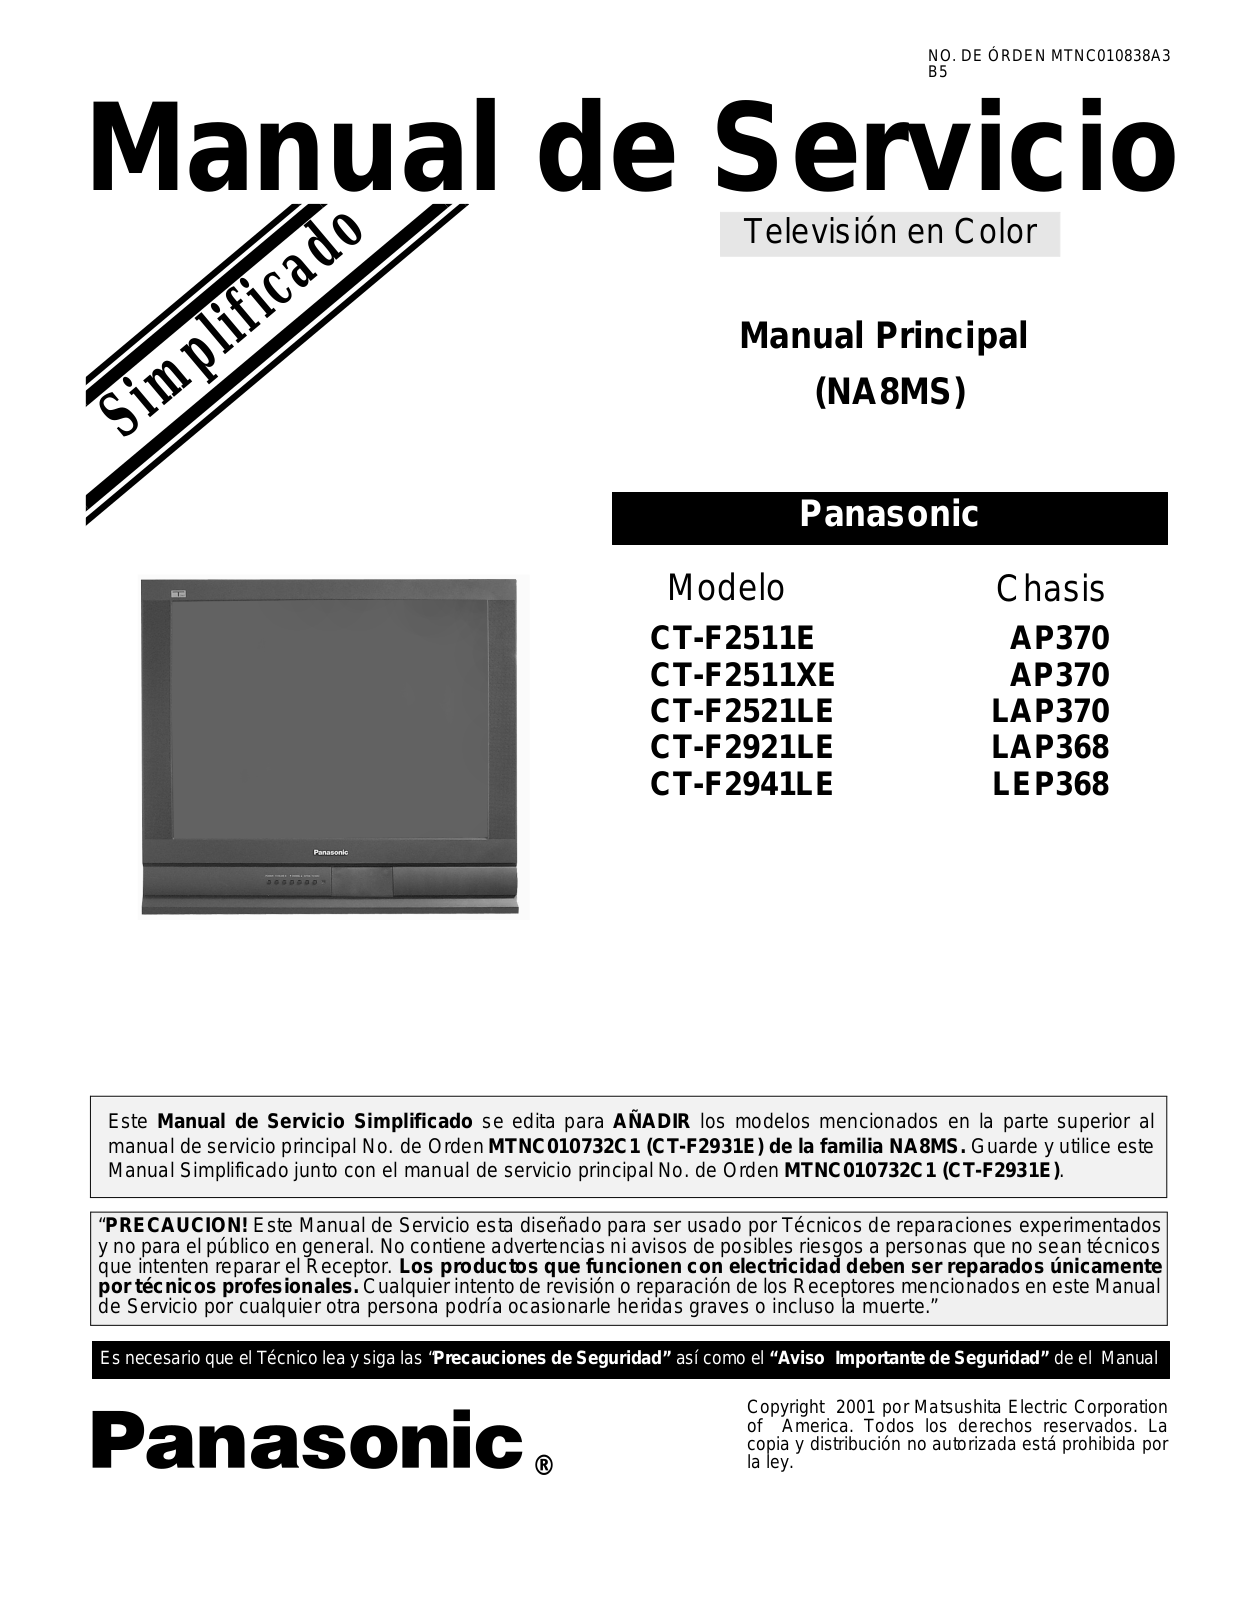 Panasonic CT-F2511E, CT-F2511XE, CT-F2521LE, CT-F2921LE, CT-F2941LE Service Manual